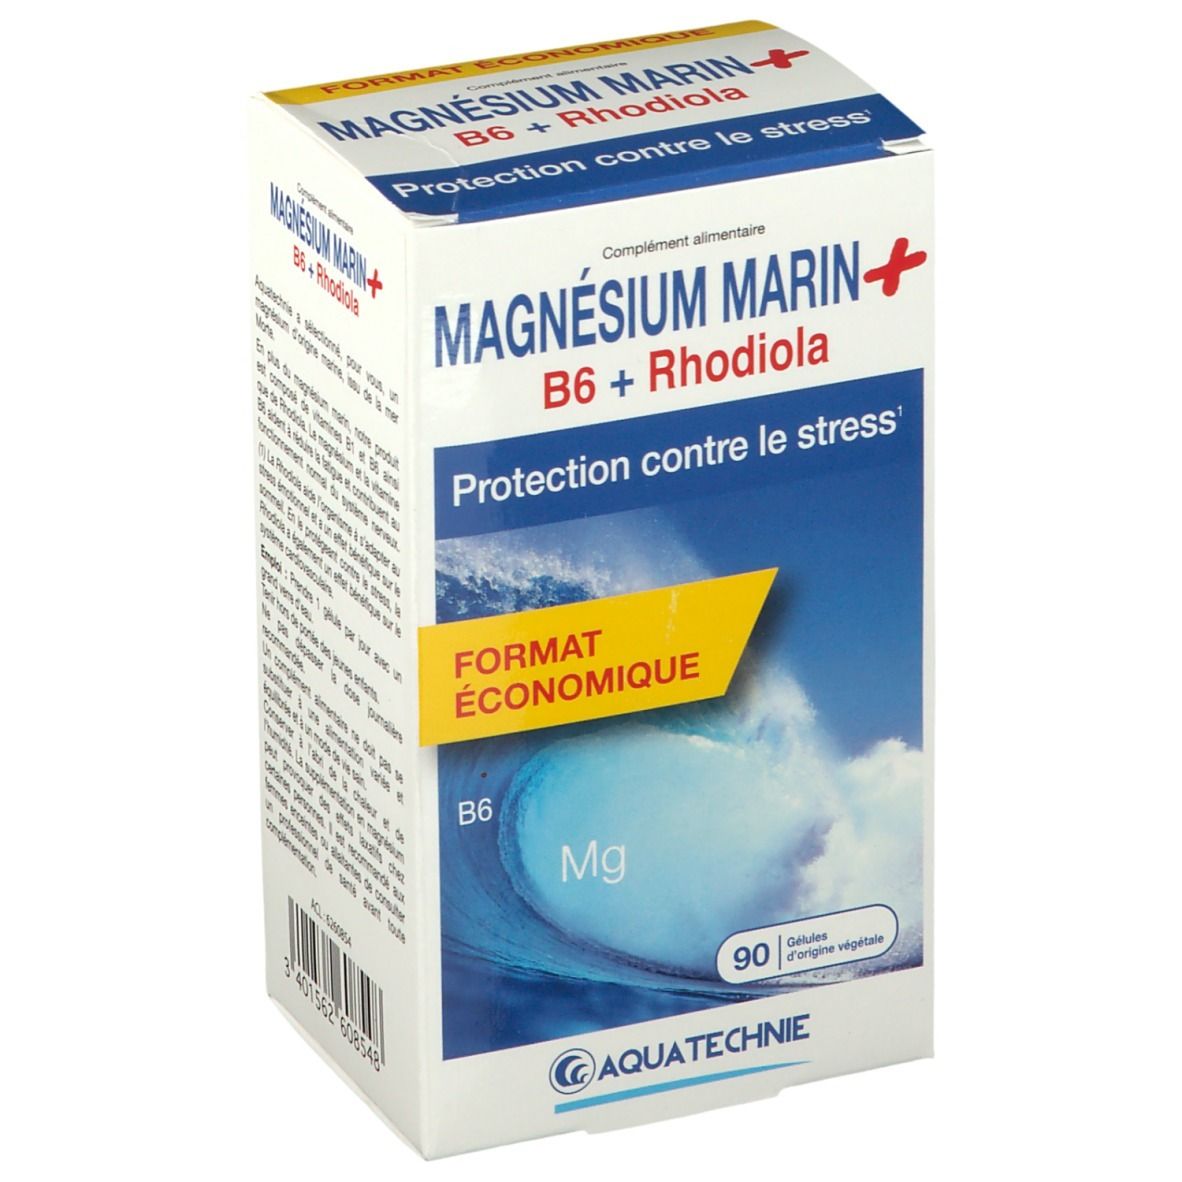 Aquatechnie Magnésium Marin Stress Rhodiola